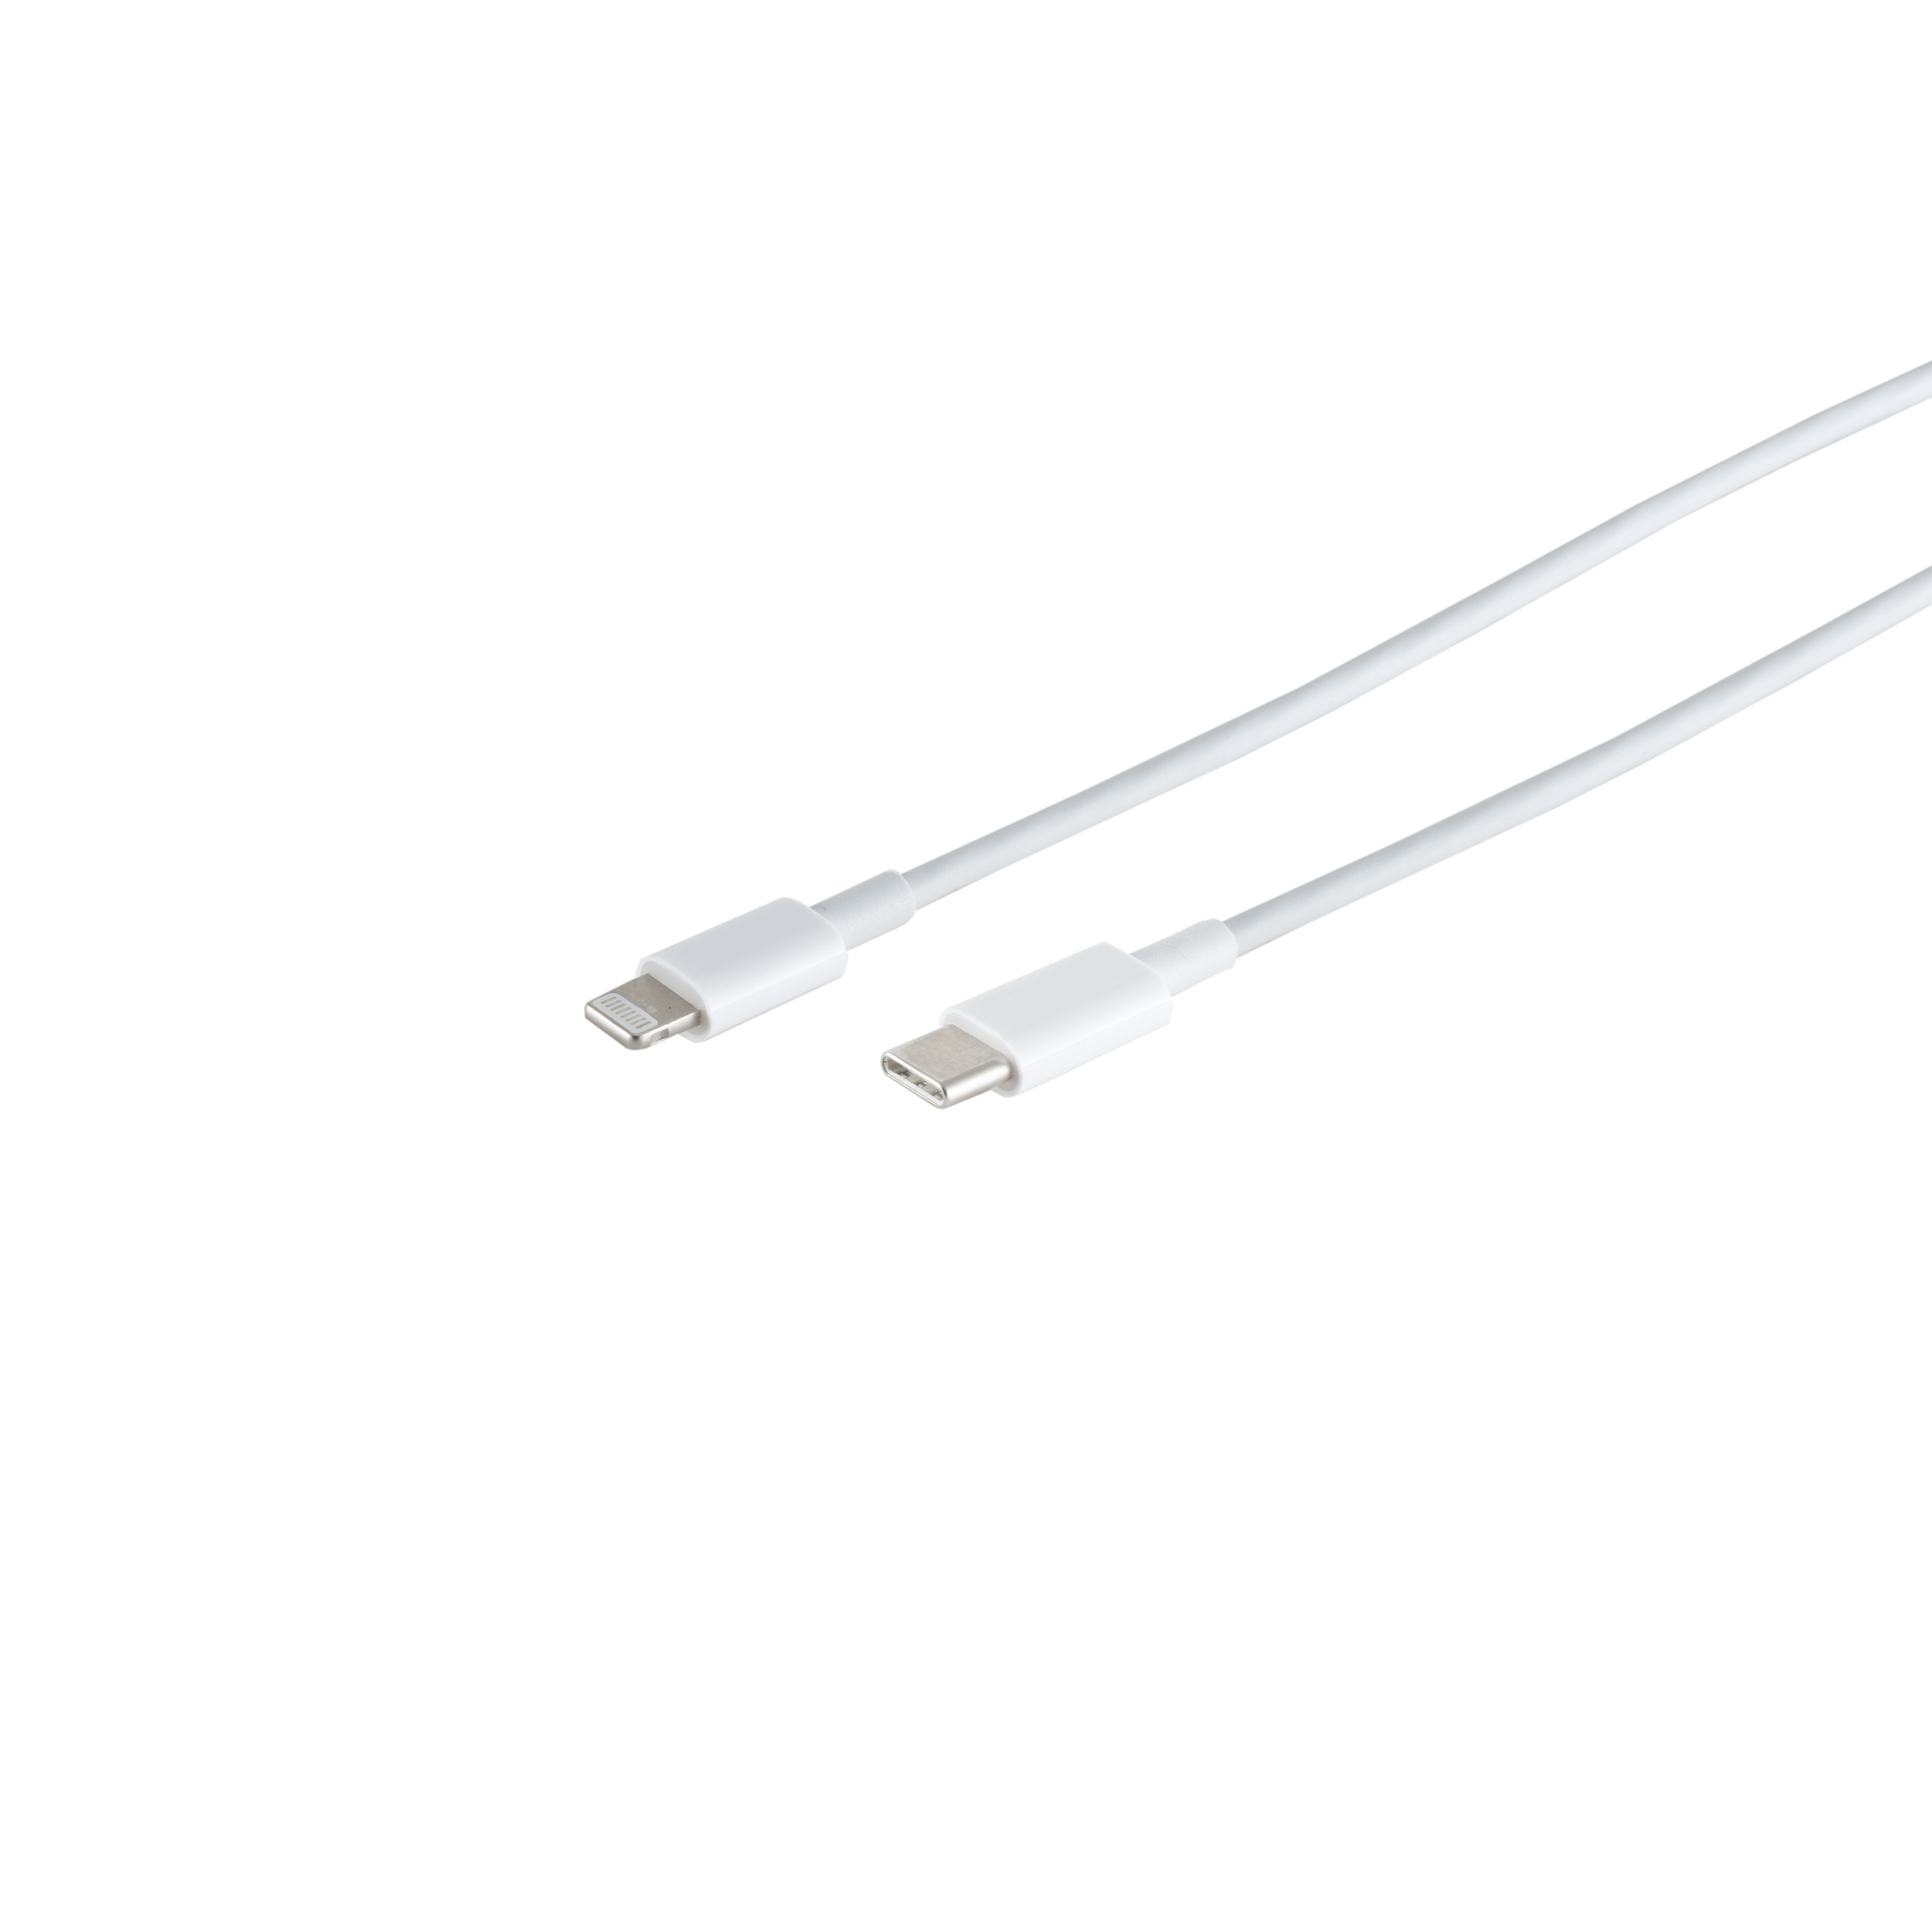 S/CONN MAXIMUM CONNECTIVITY USB Lade USB-C® 8-pin Kabel USB Stecker, Stecker auf Kabel